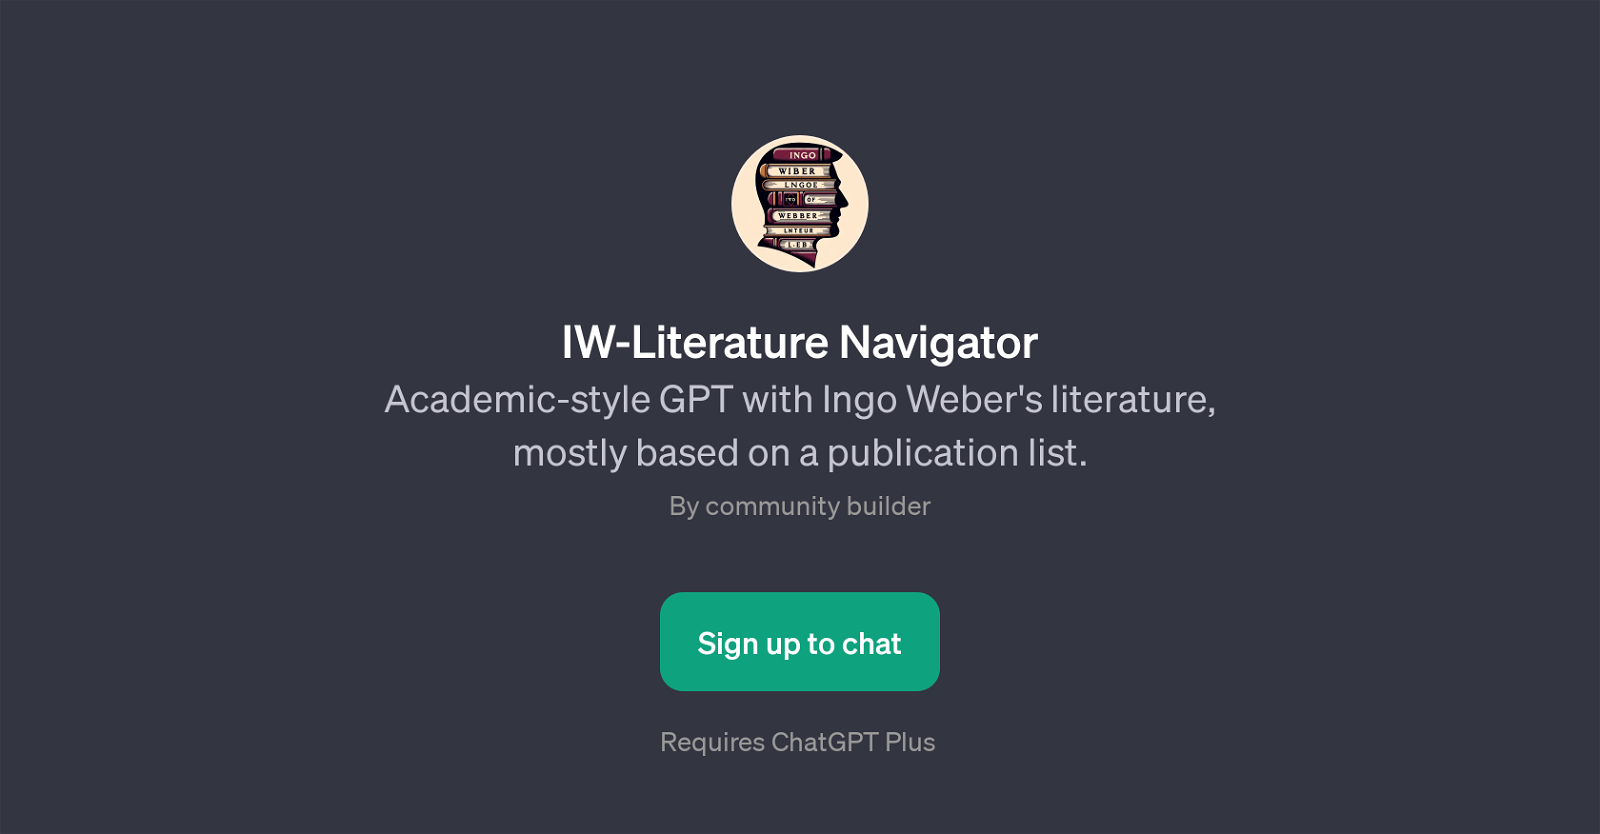 IW-Literature Navigator website